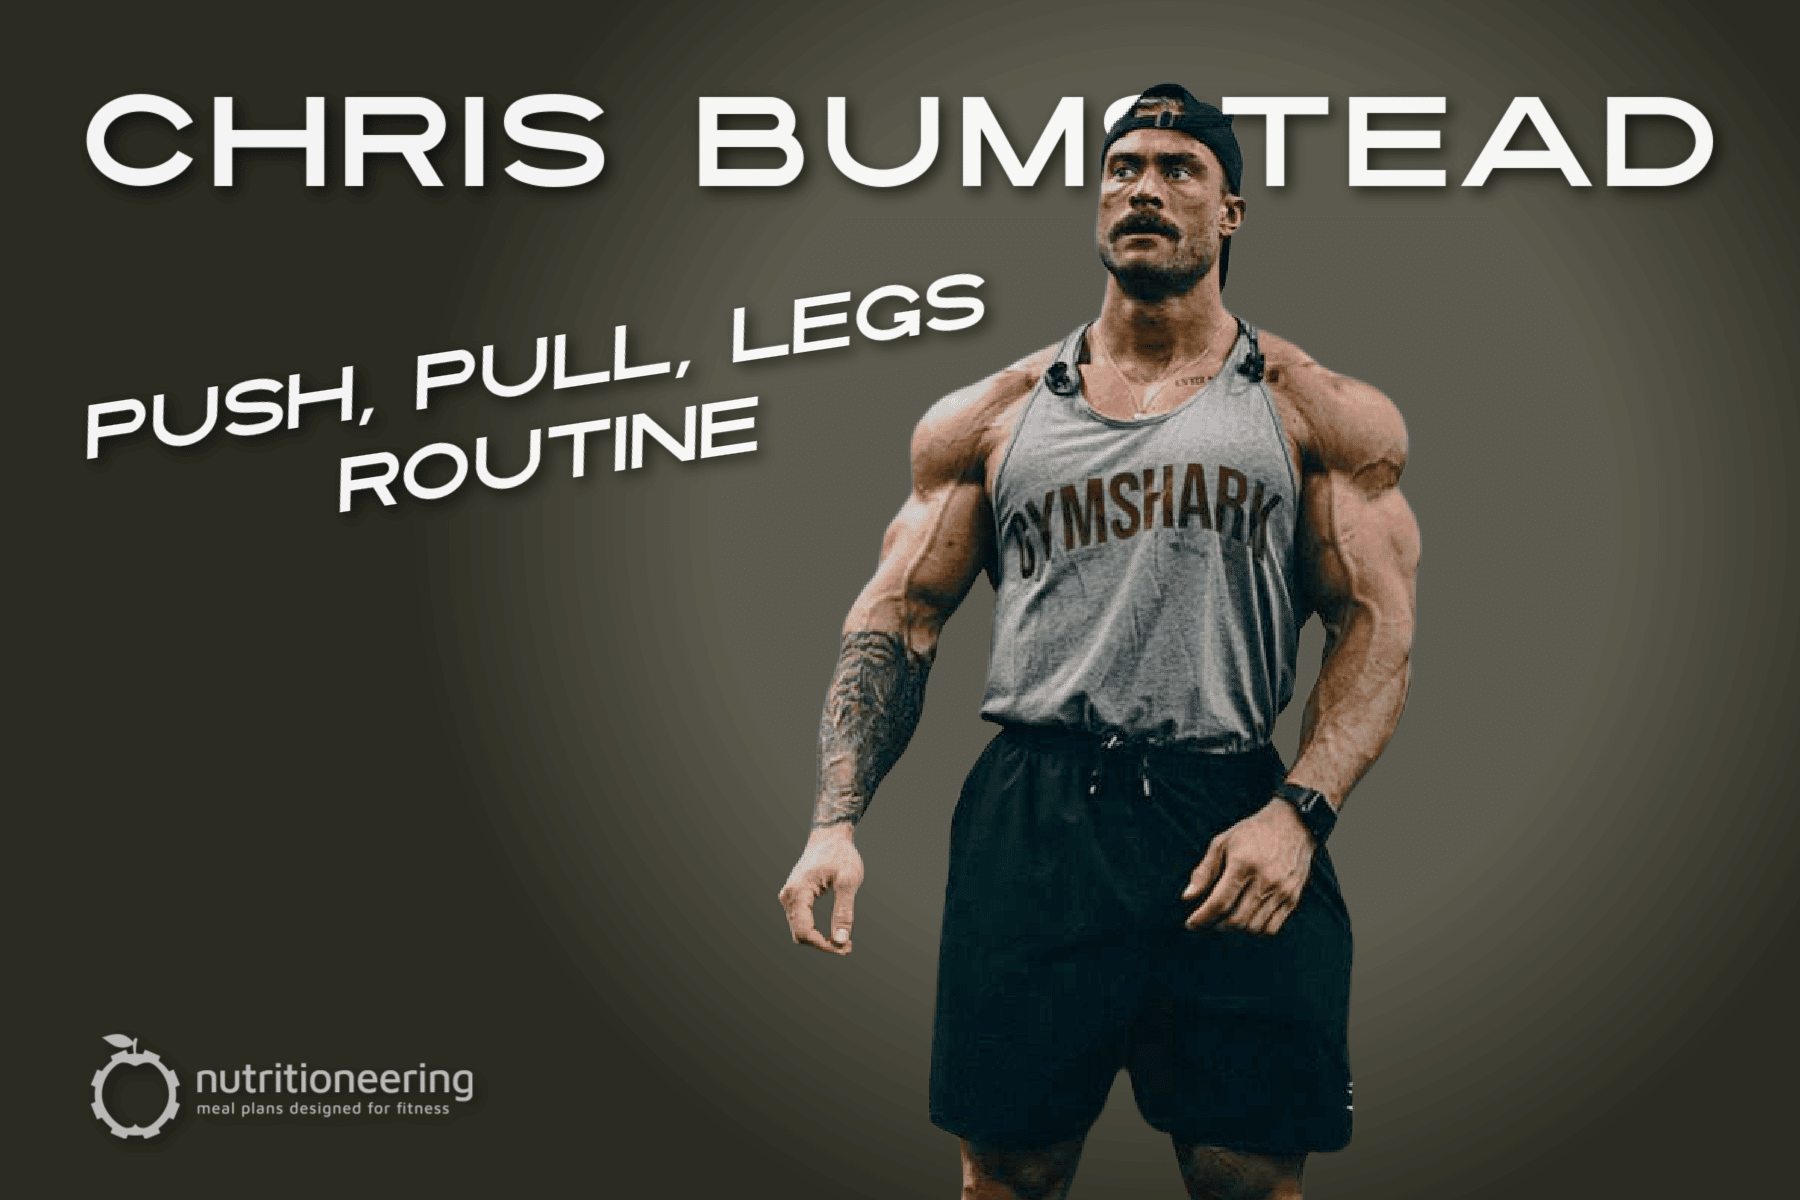 Chris Bumstead Pull Legs Routine (Exact 6-Day Split) Nutritioneering